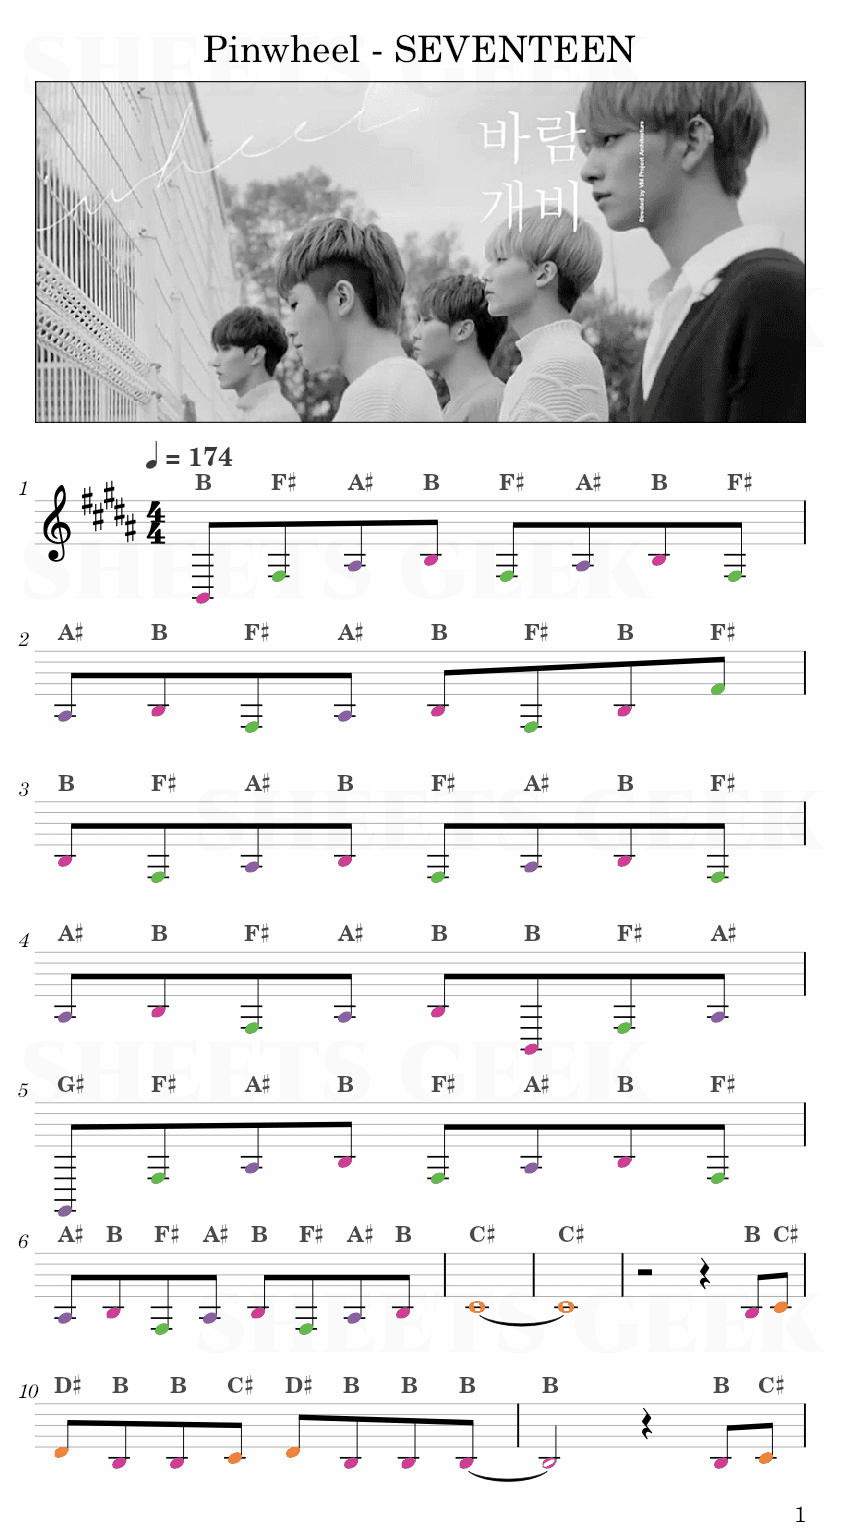 Pinwheel - SEVENTEEN Easy Sheet Music Free for piano, keyboard, flute, violin, sax, cello page 1